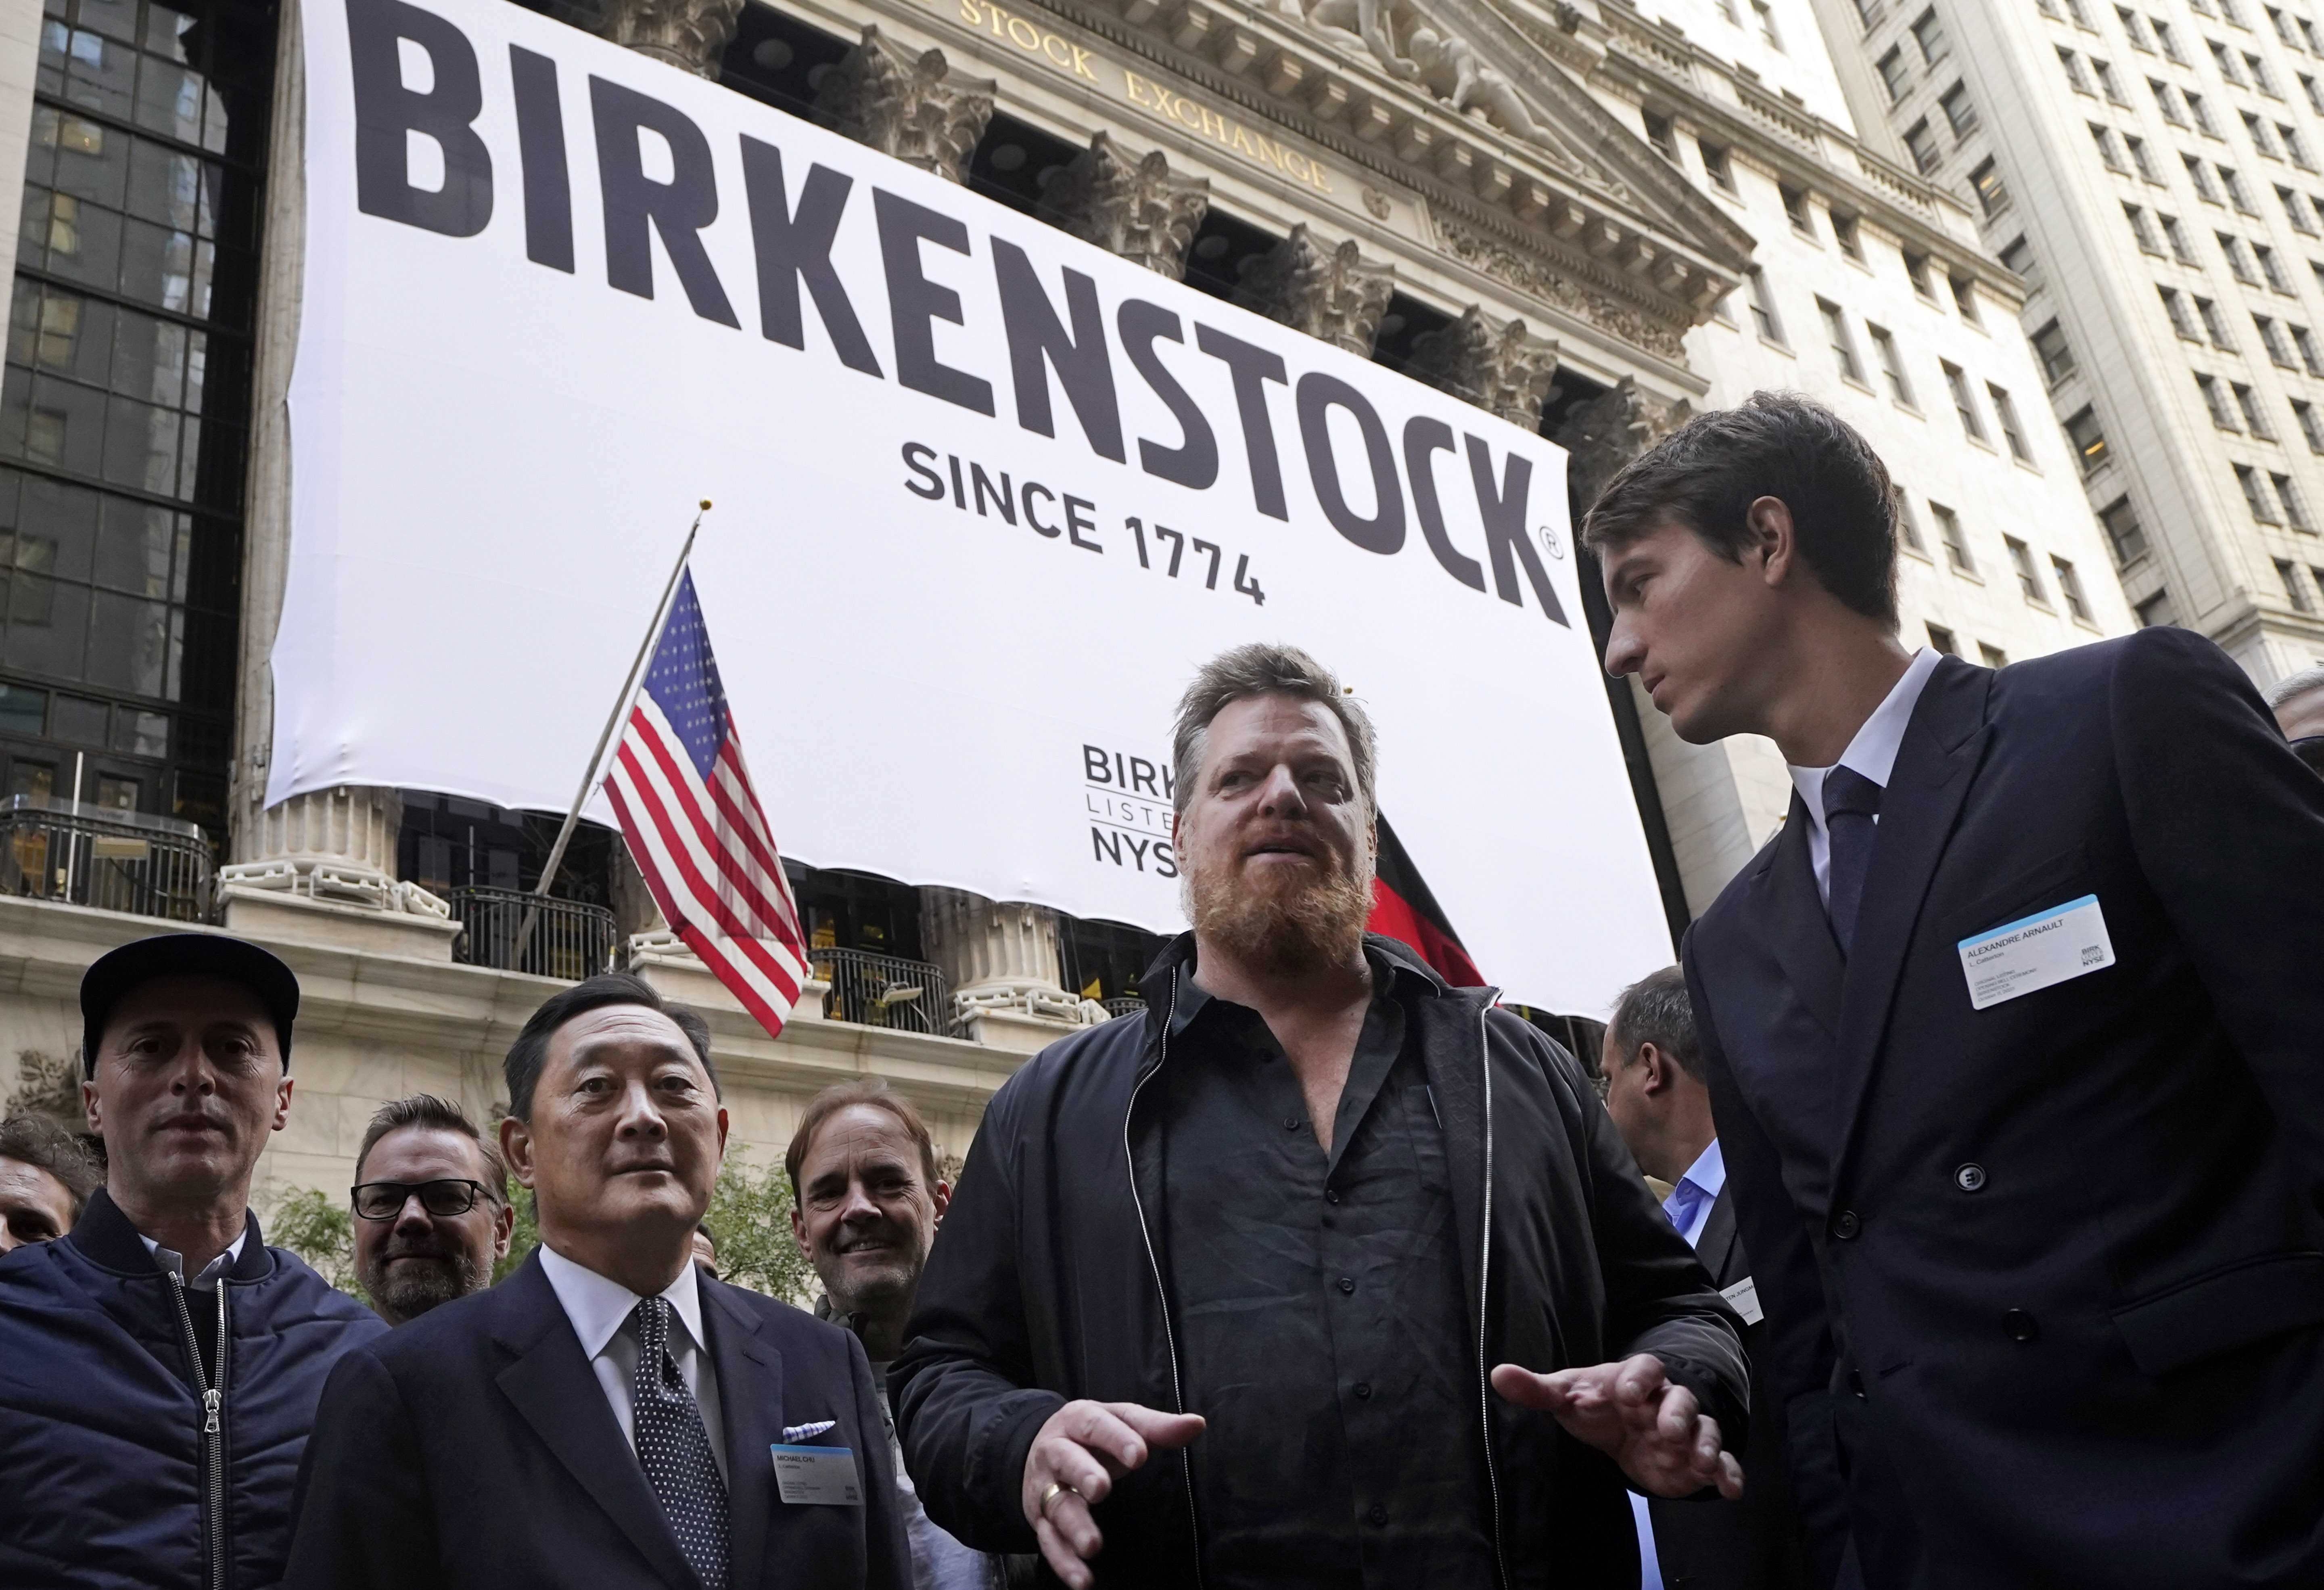 Birkenstock Raises $1.48 Billion in Its I.P.O. - The New York Times